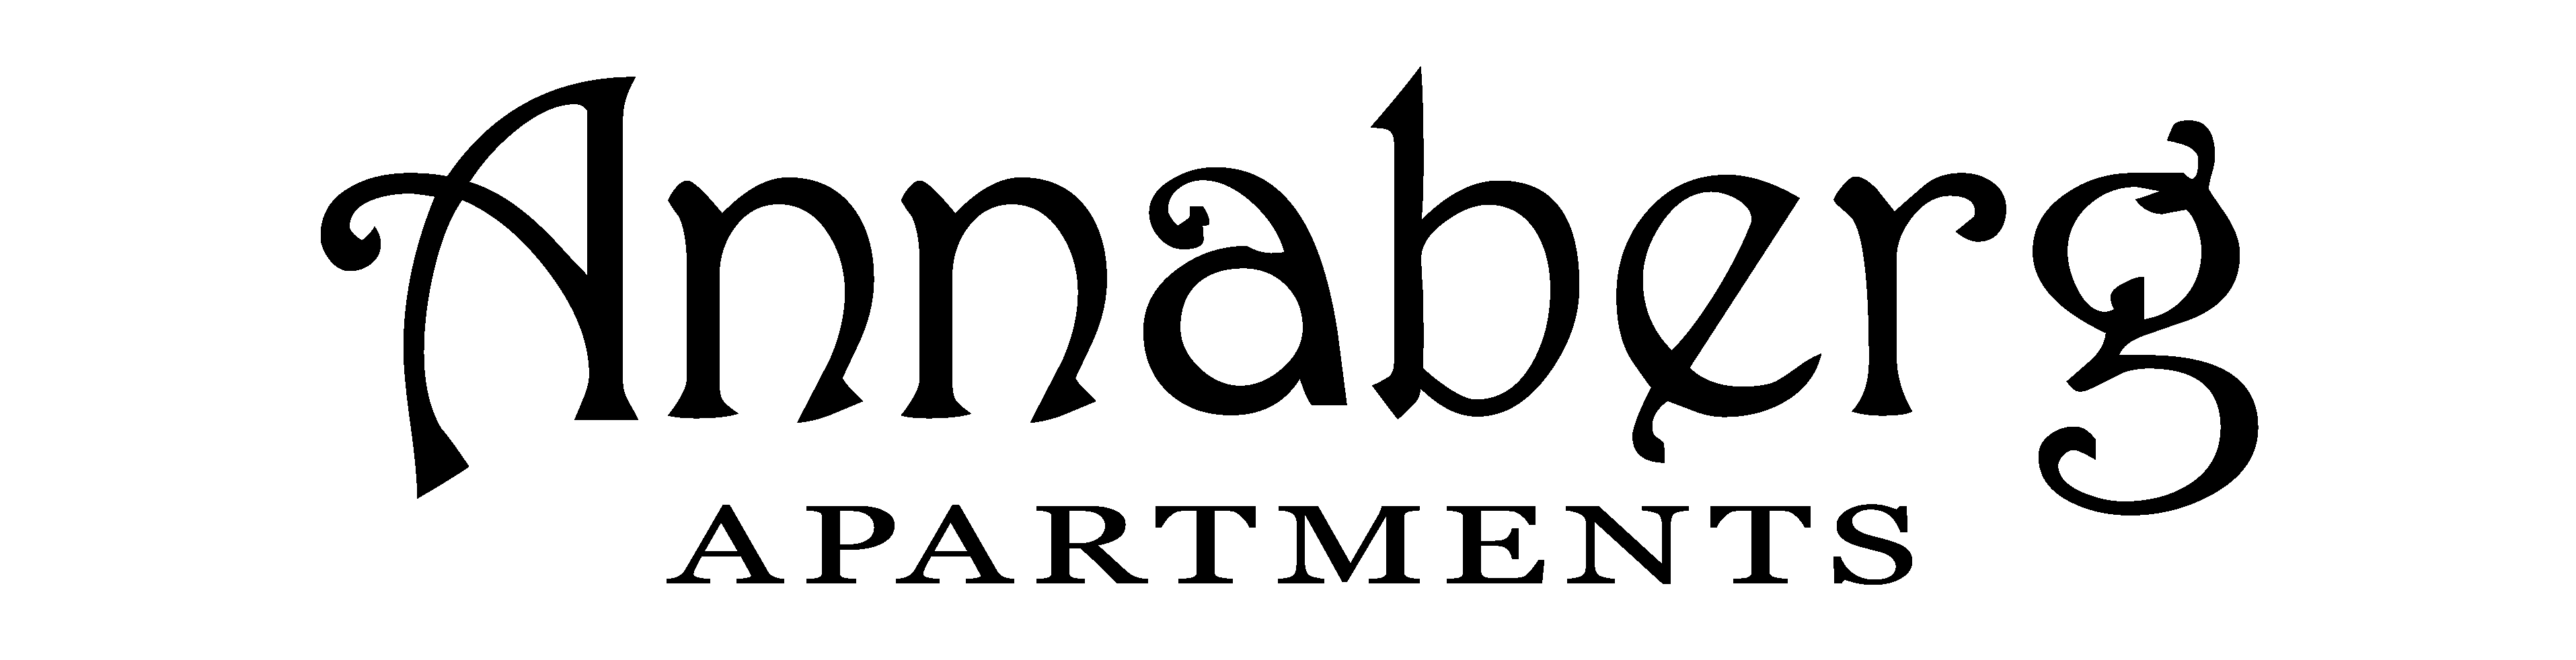 Annaberg logo